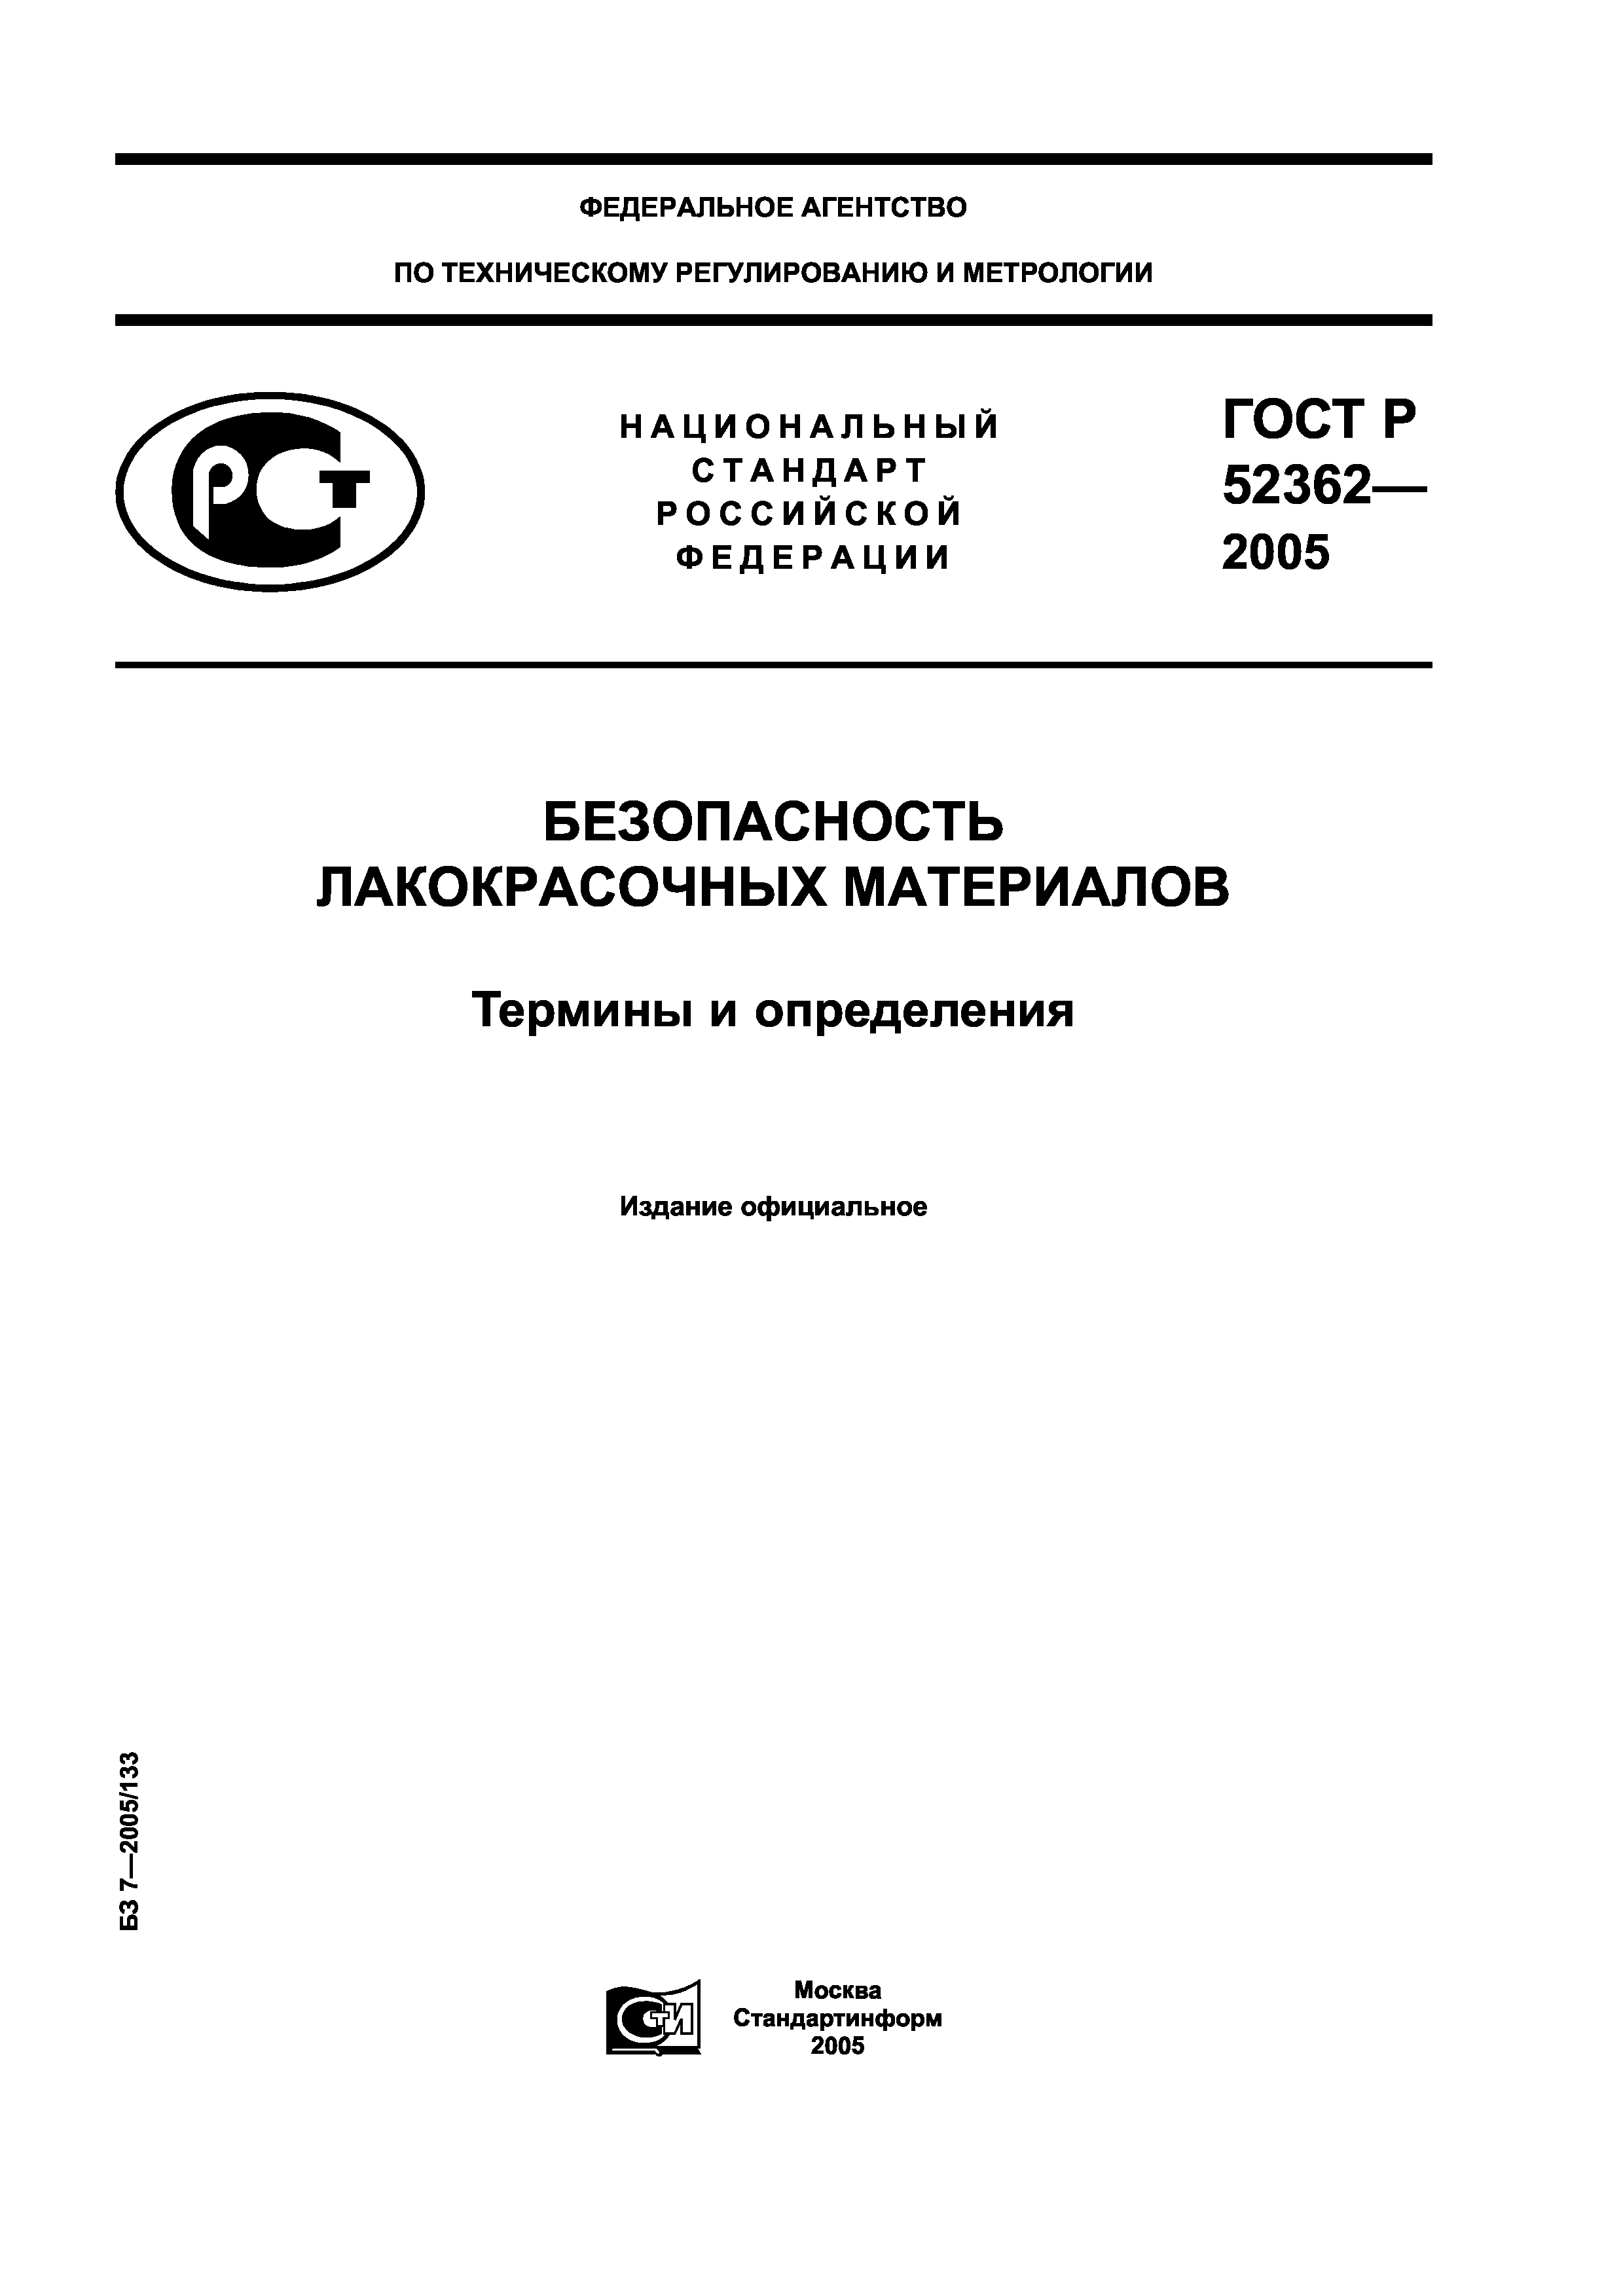 ГОСТ Р 52362-2005